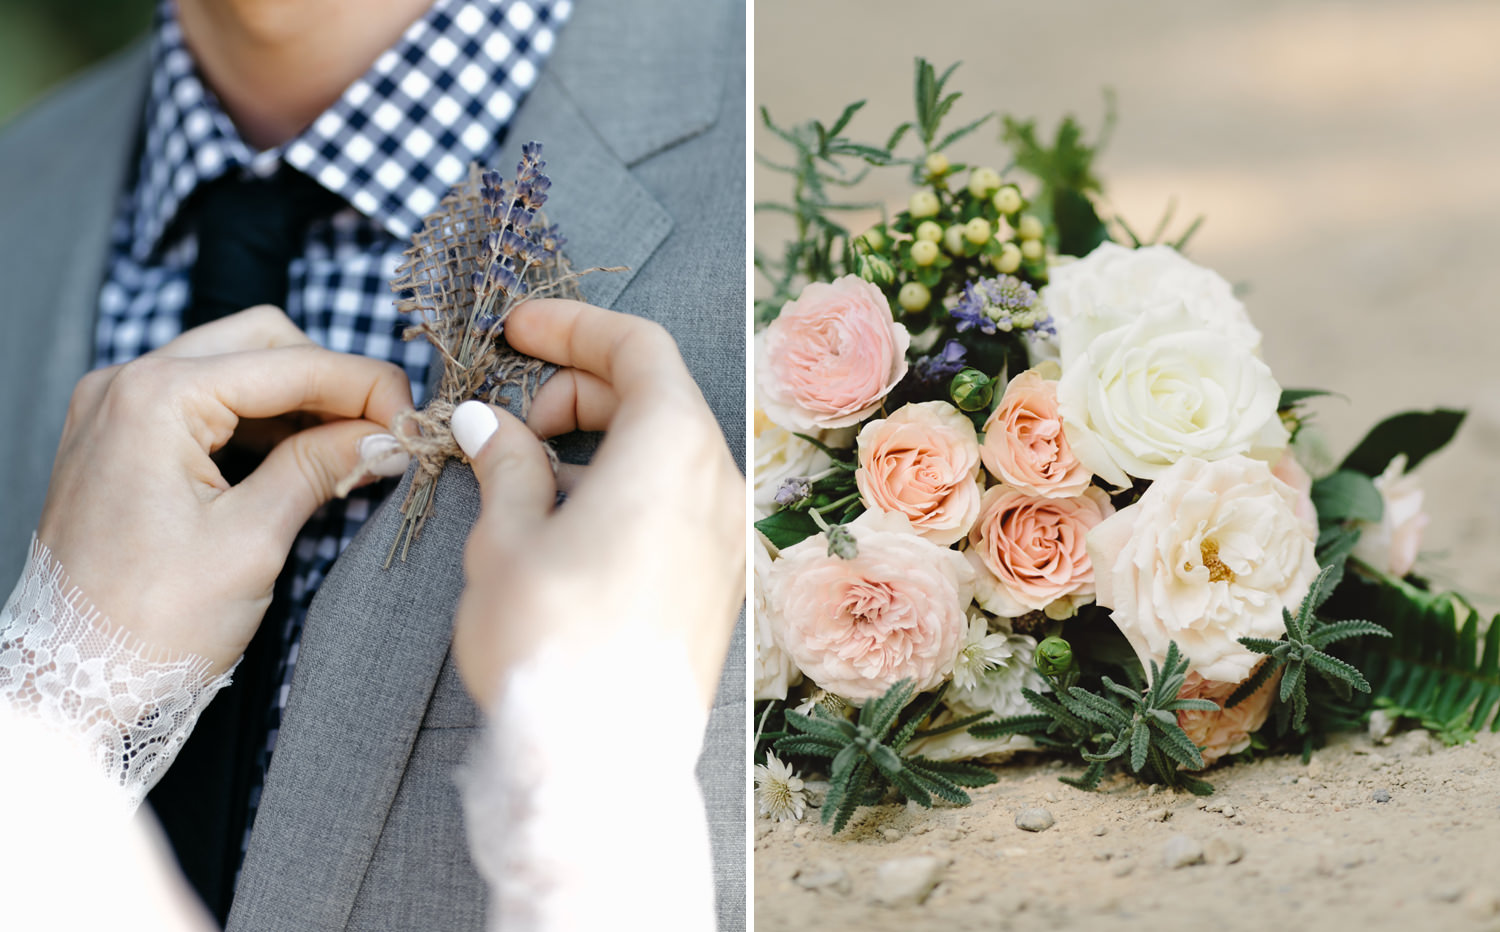 Wedding-details-flowers